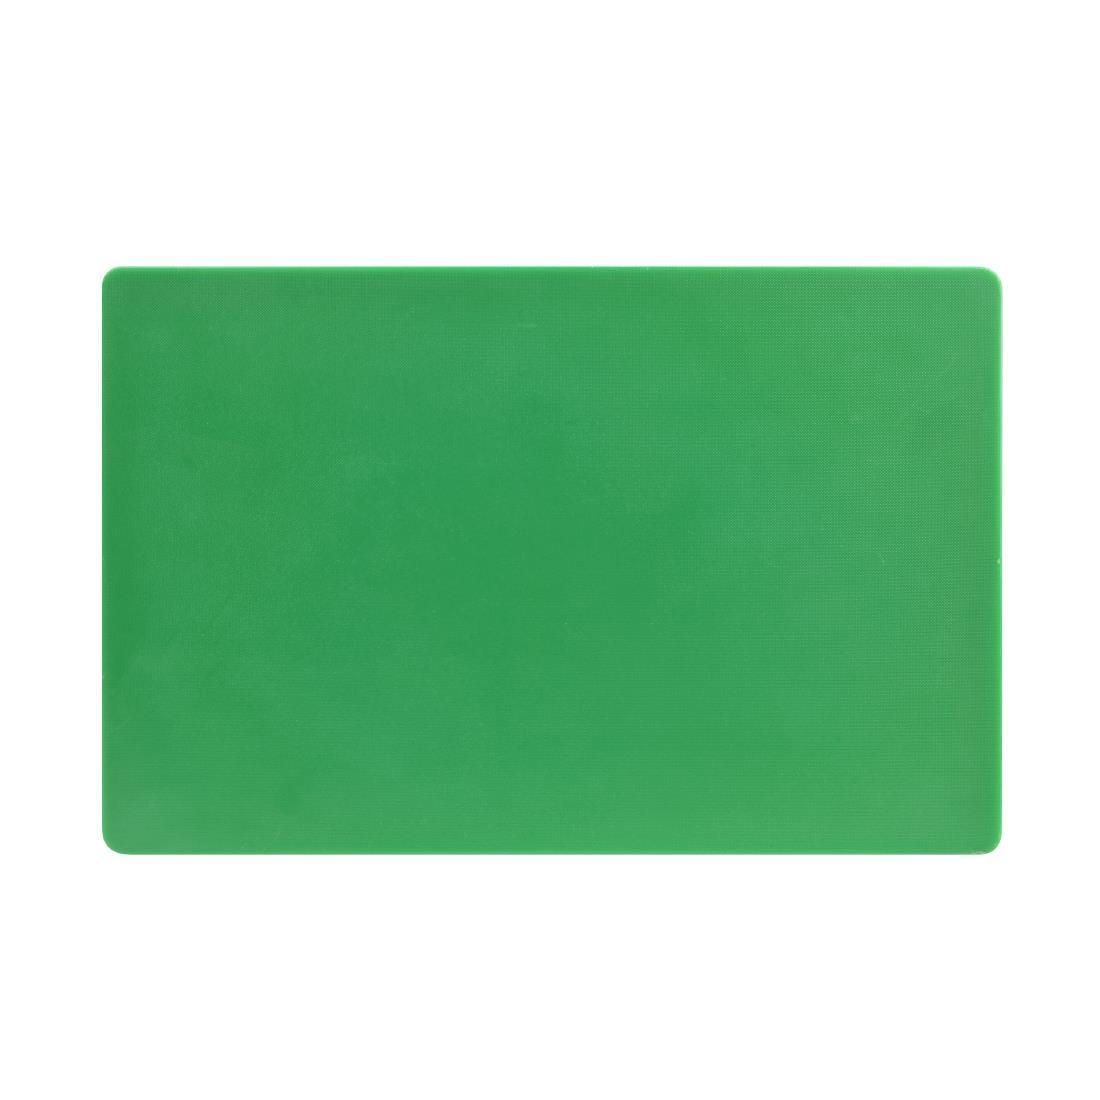 Hygiplas Extra Thick Low Density Green Chopping Board Standard - DM006  - 2